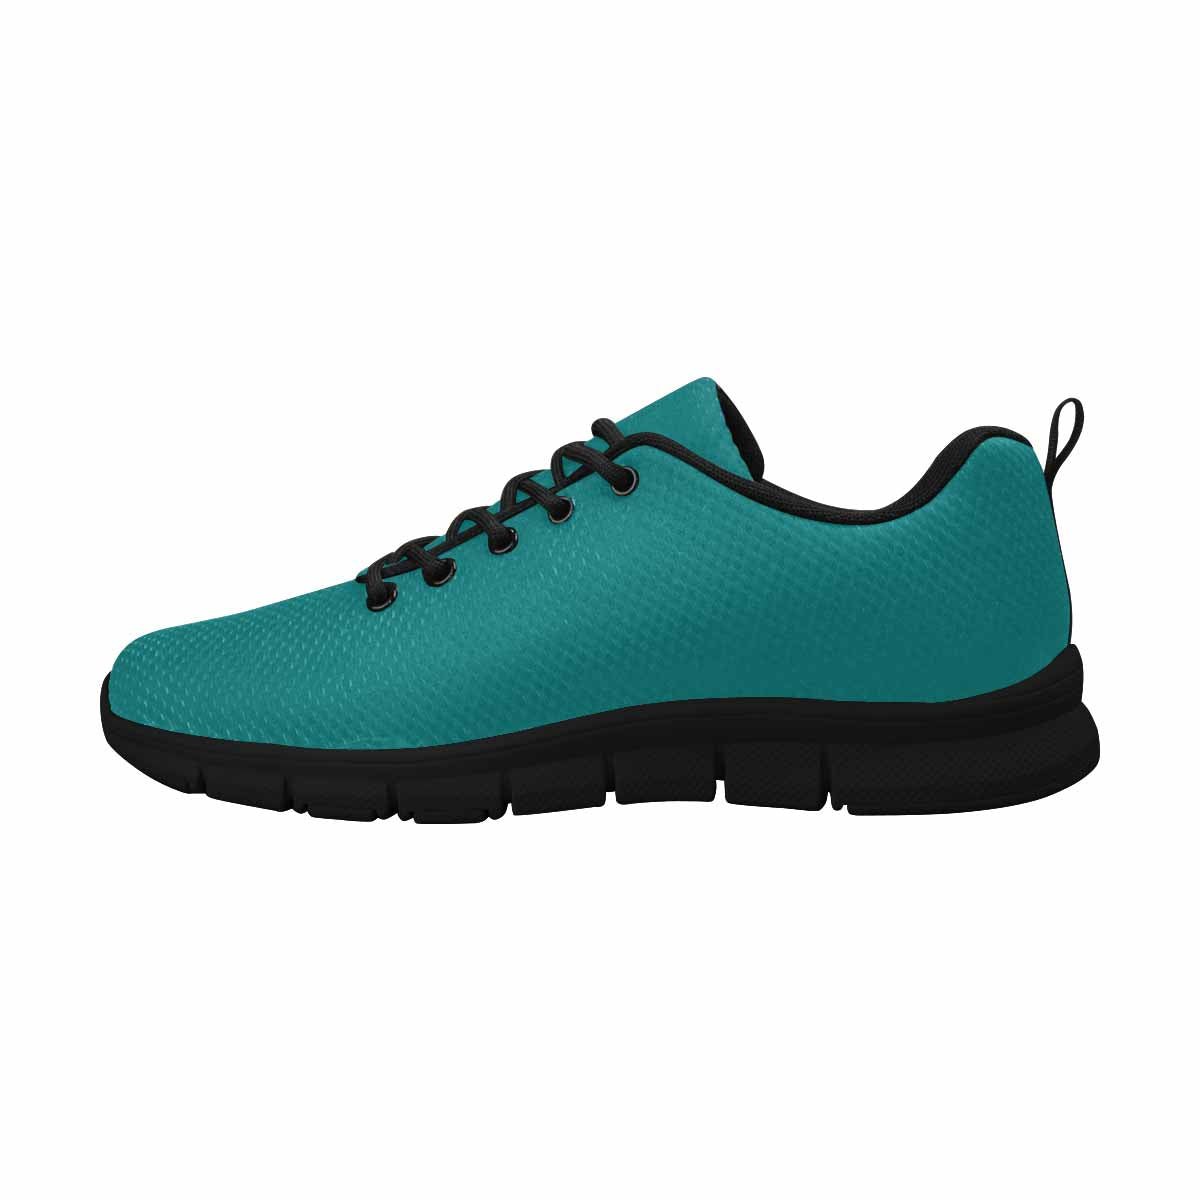 Sneakers For Men, Dark Teal Green Running Shoes